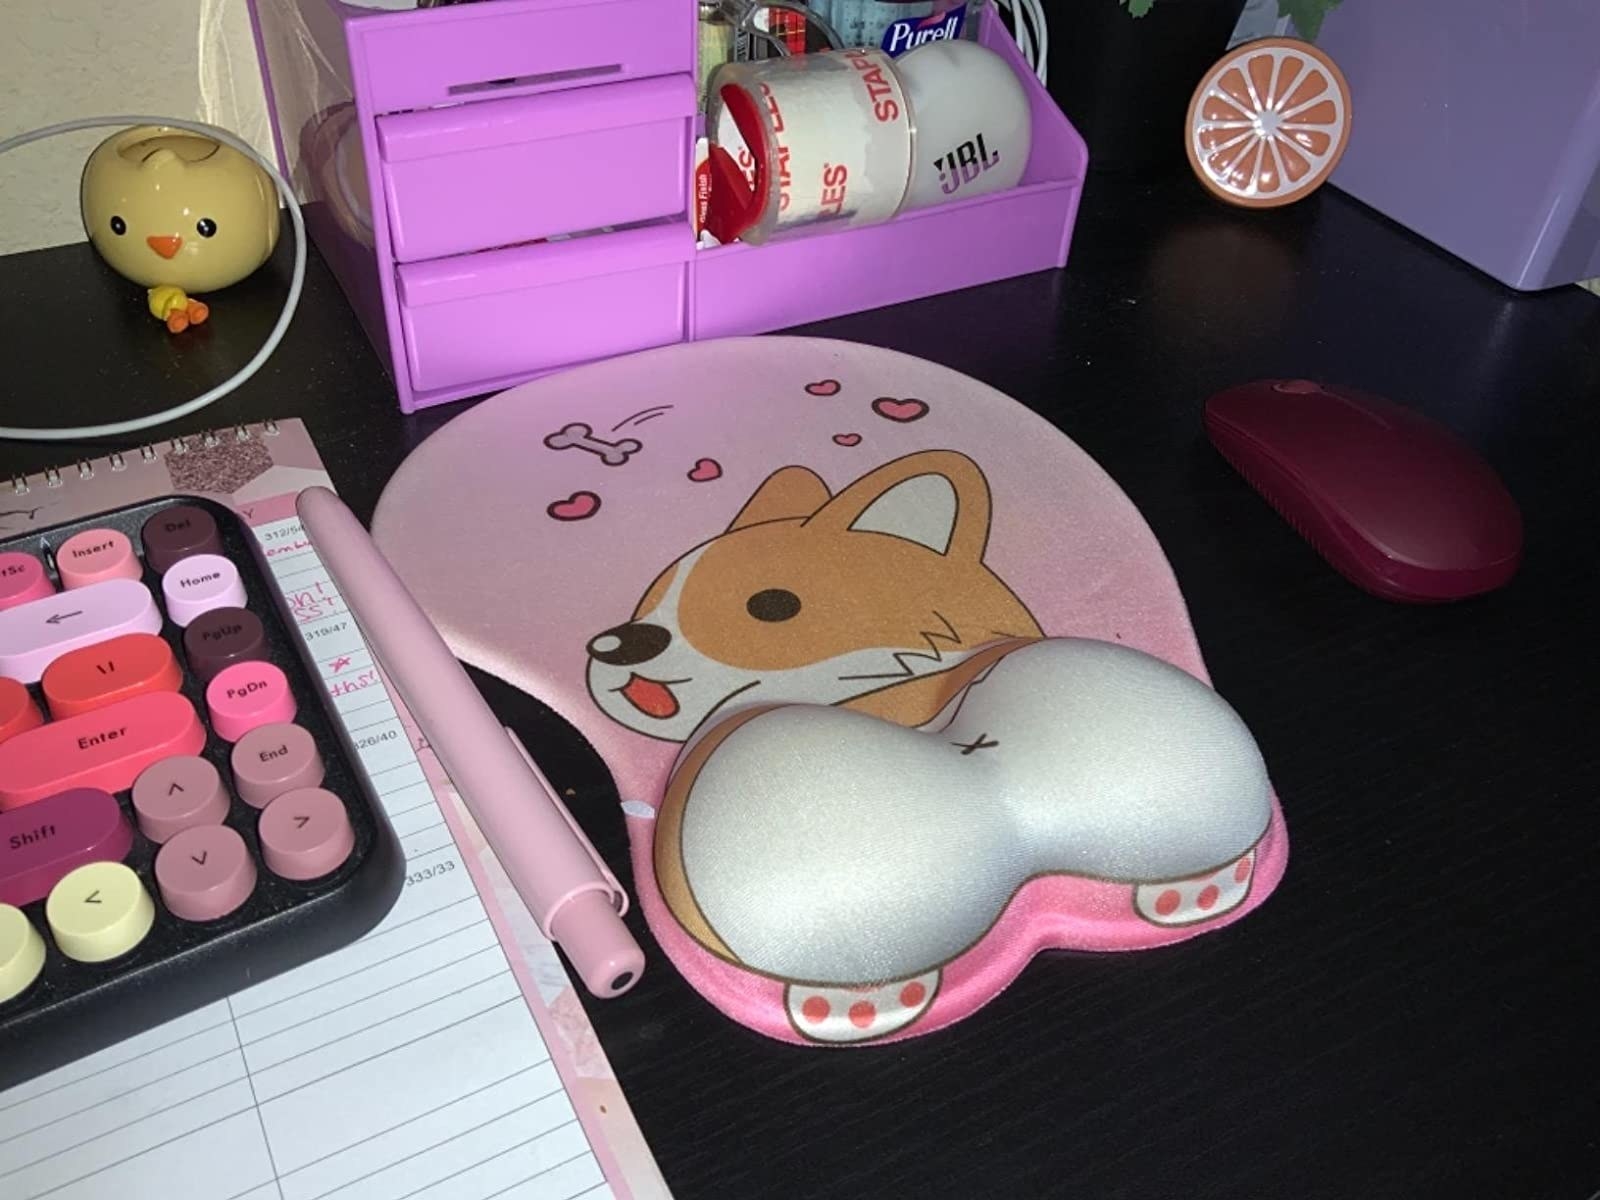 The mousepad on a desk